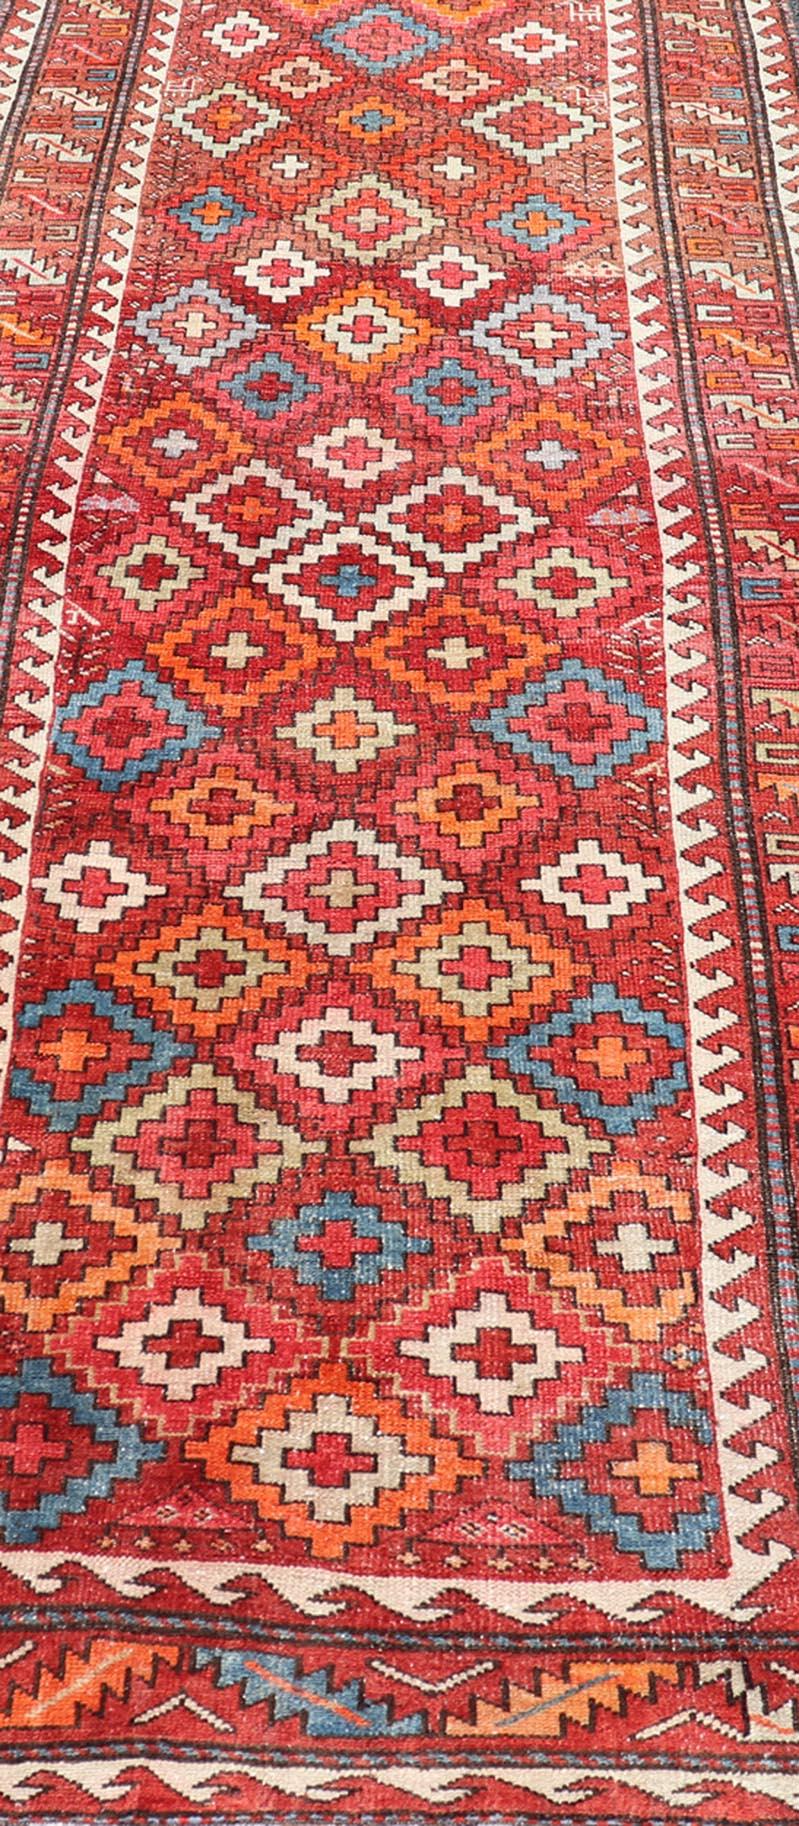 20th Century Antique Persian Fine Weave Hamadan Gallery Rug in Multi Colors in Tribal Design For Sale